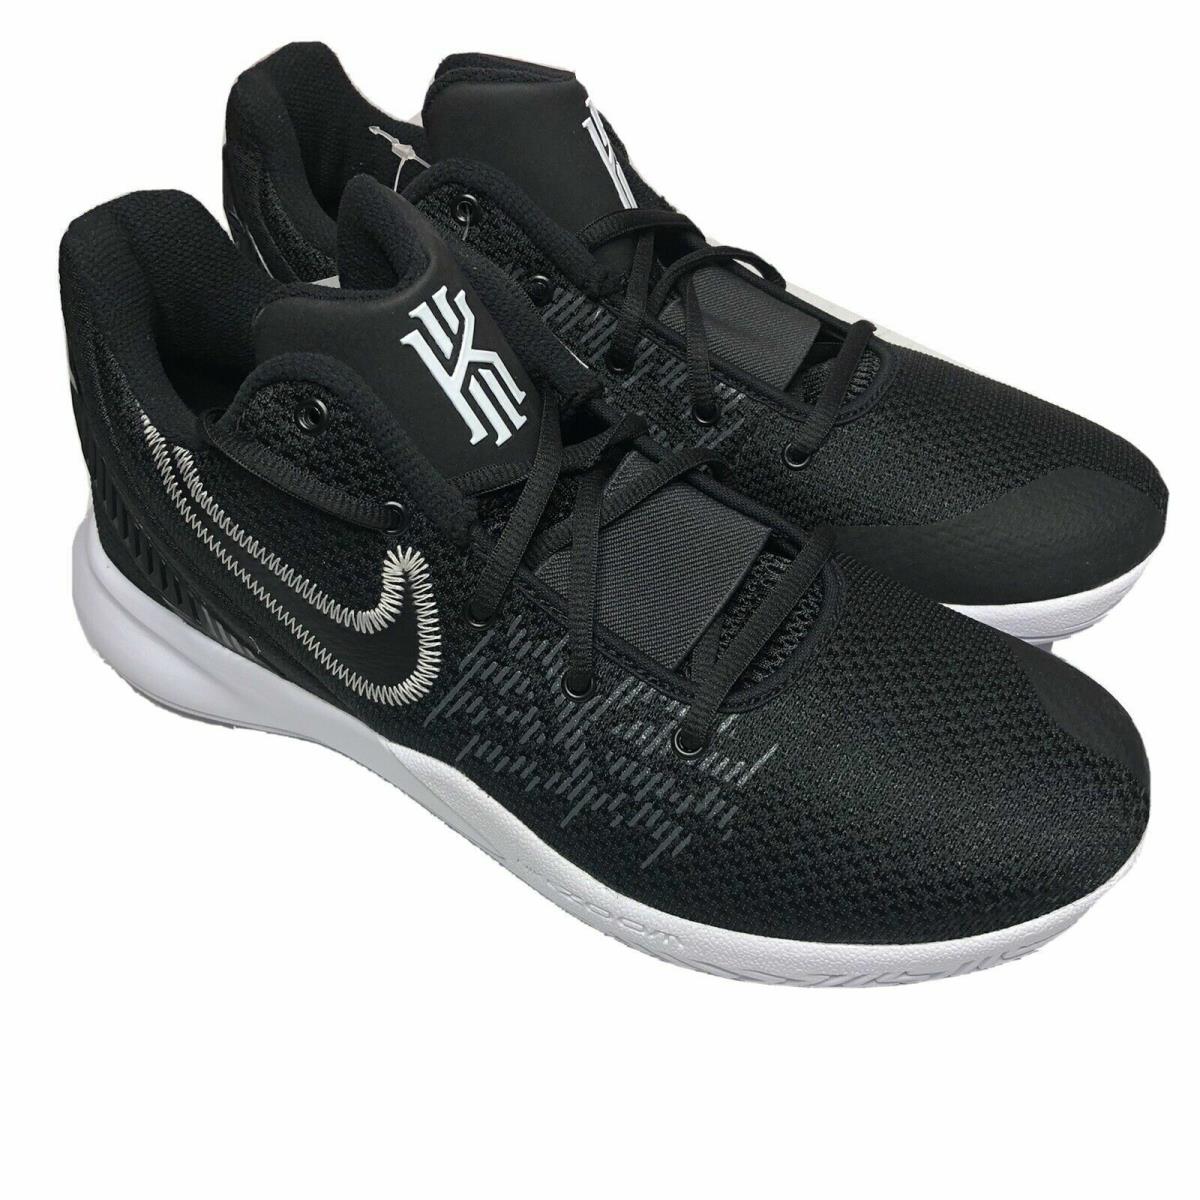 SZ 9 Nike Kyrie Flytrap II Basketball Shoes Black/black/white AO4438-001